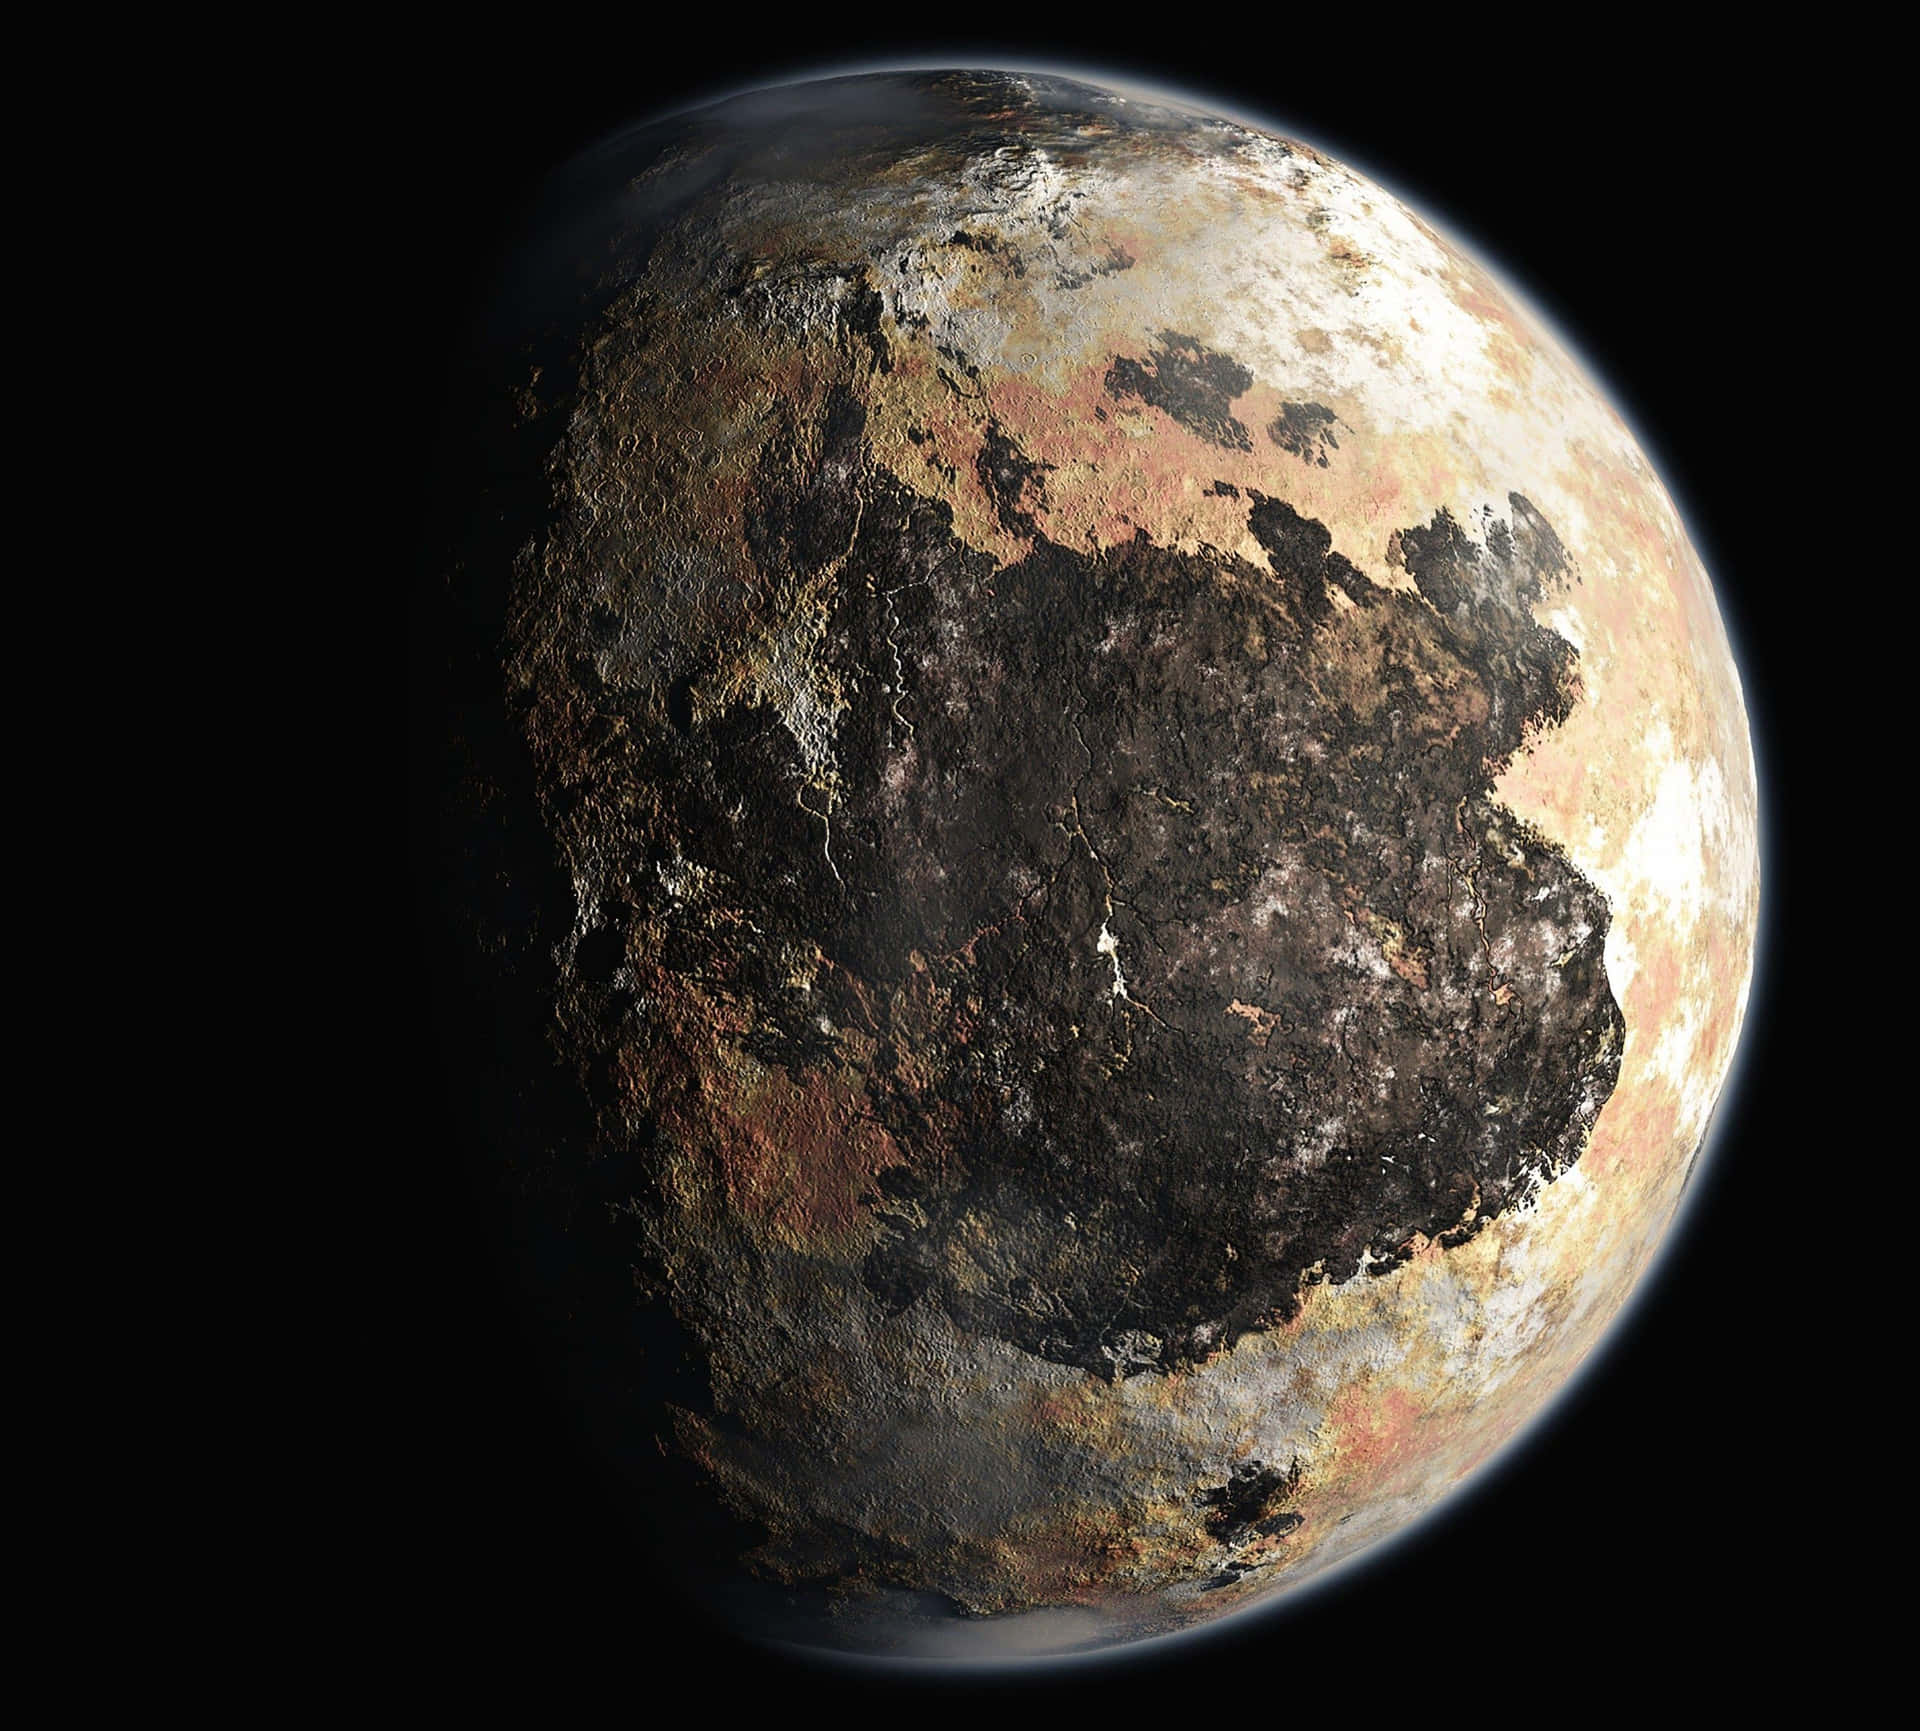 The farthest dwarf planet - Pluto